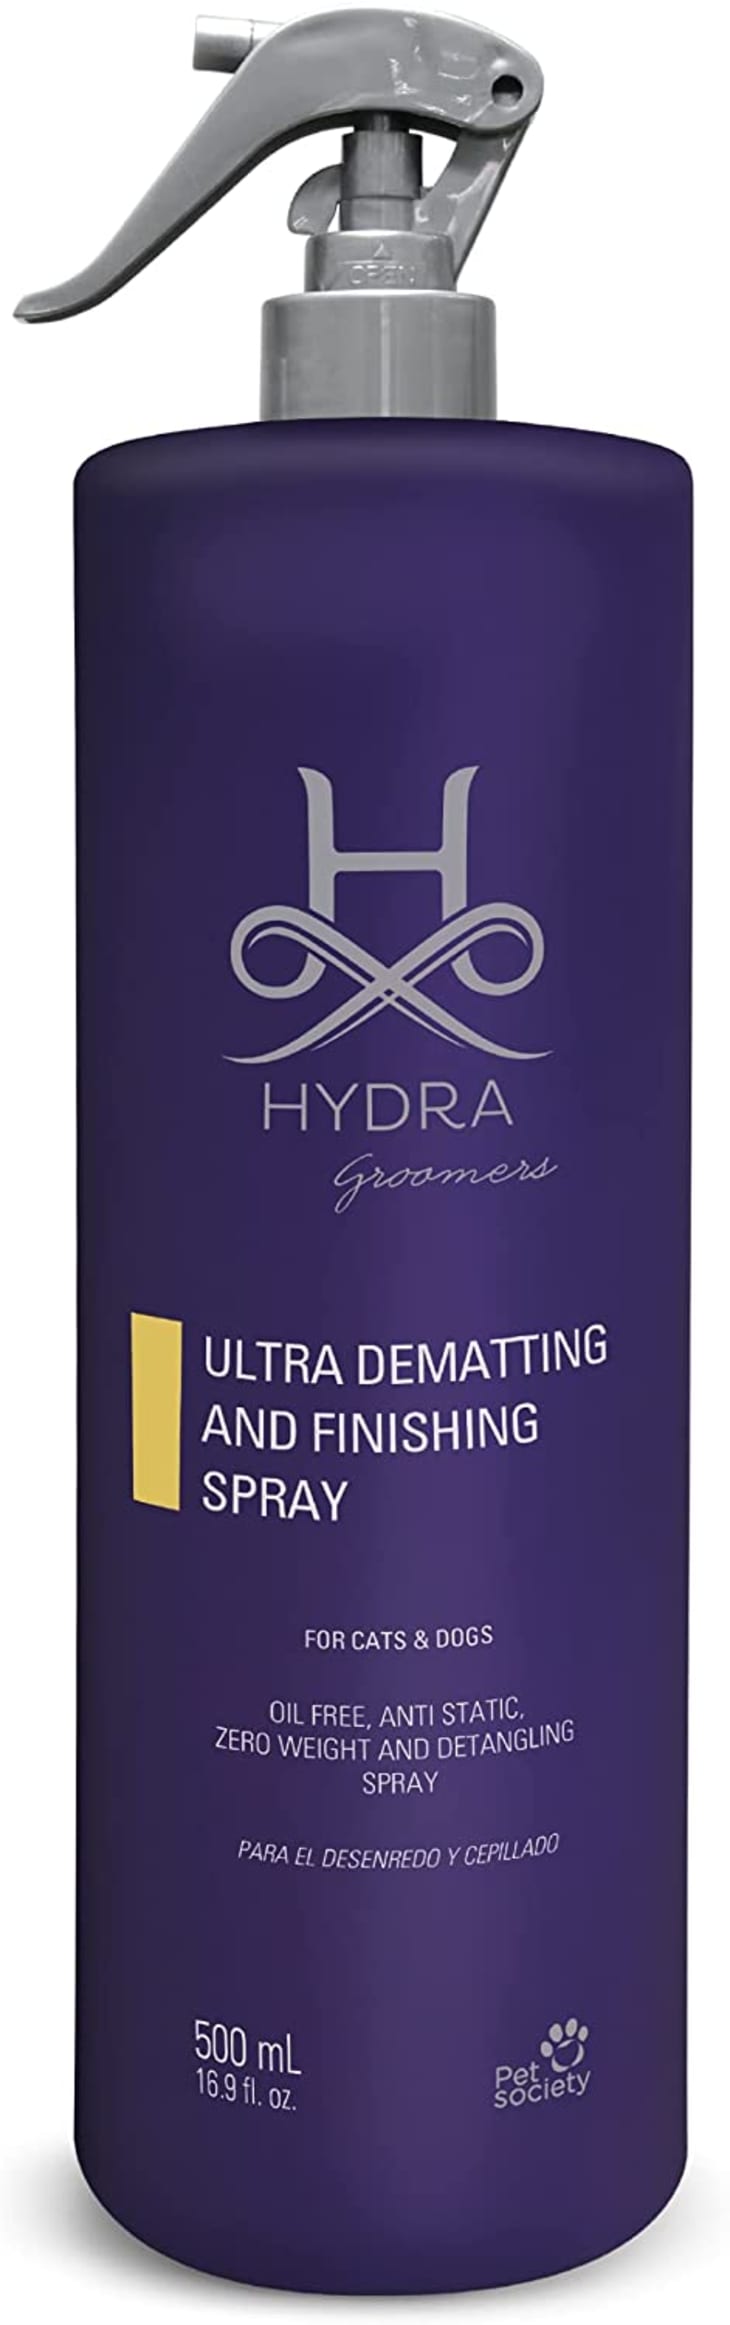 Product Image: Hydra Professional Ultra Dematting